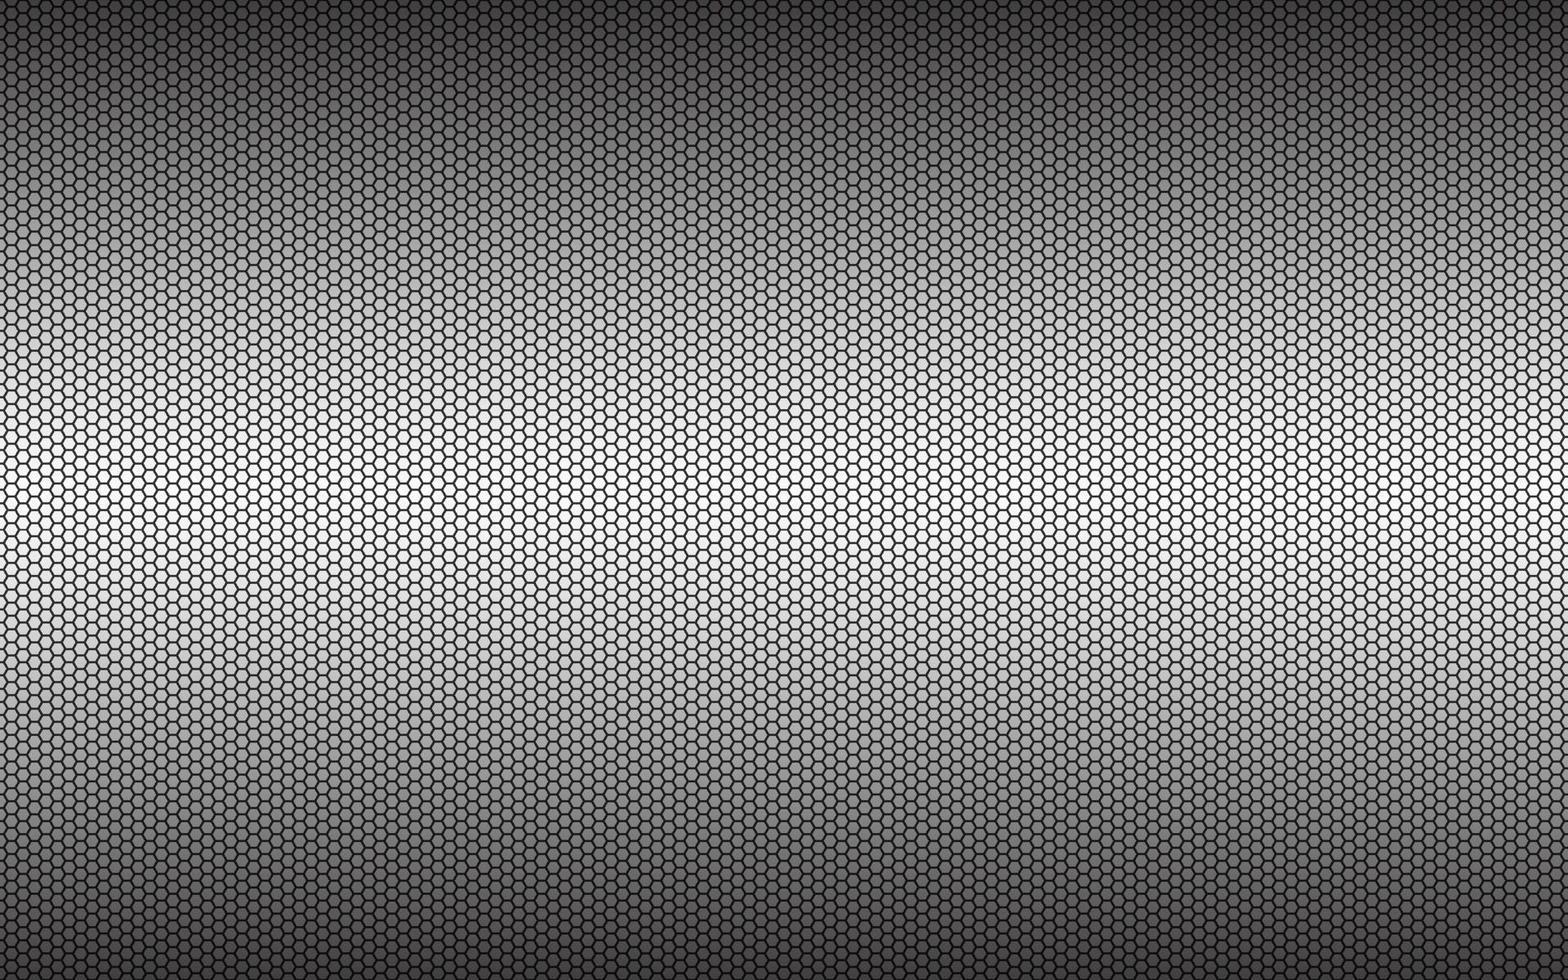 Modern simple grey geometric hexagonal background. Abstract black metallic polygonal background. Simple vector illustration